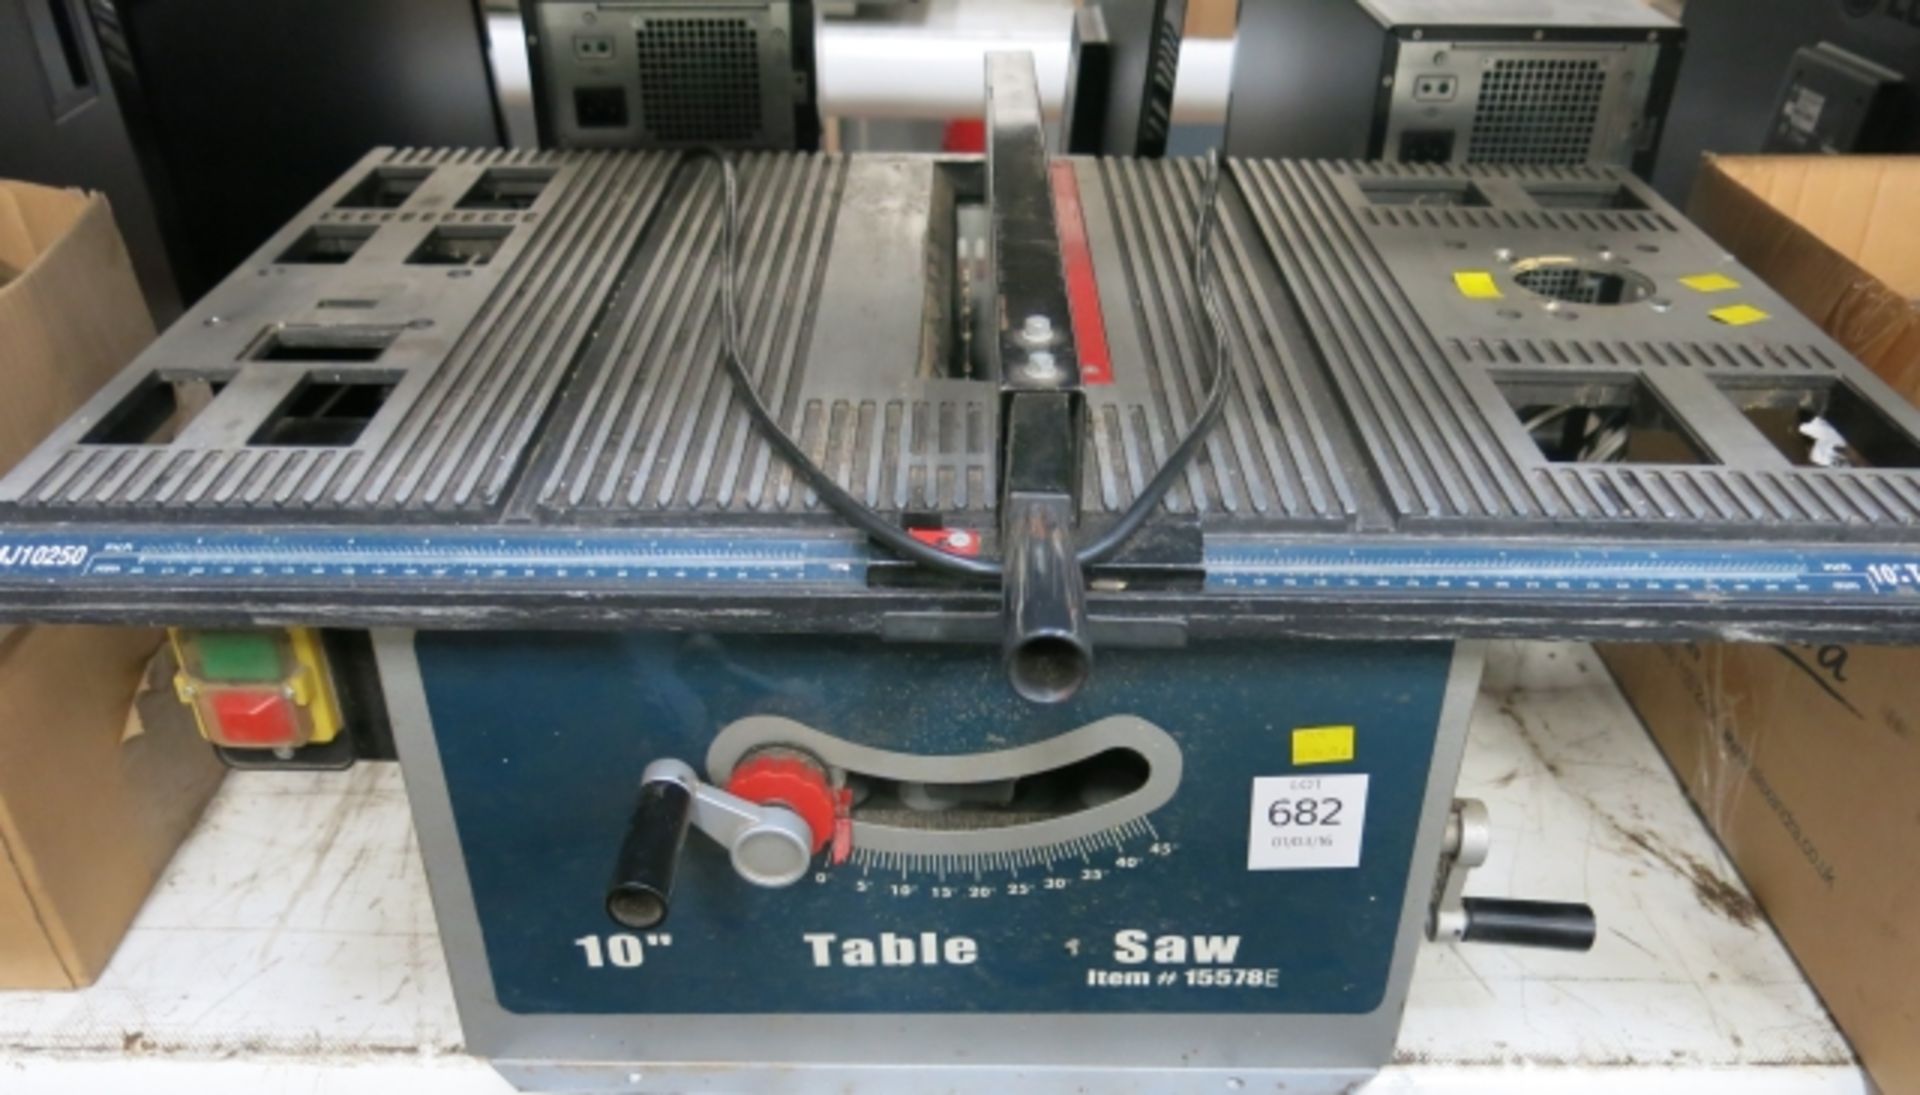 A 10'' table saw, model 15578E